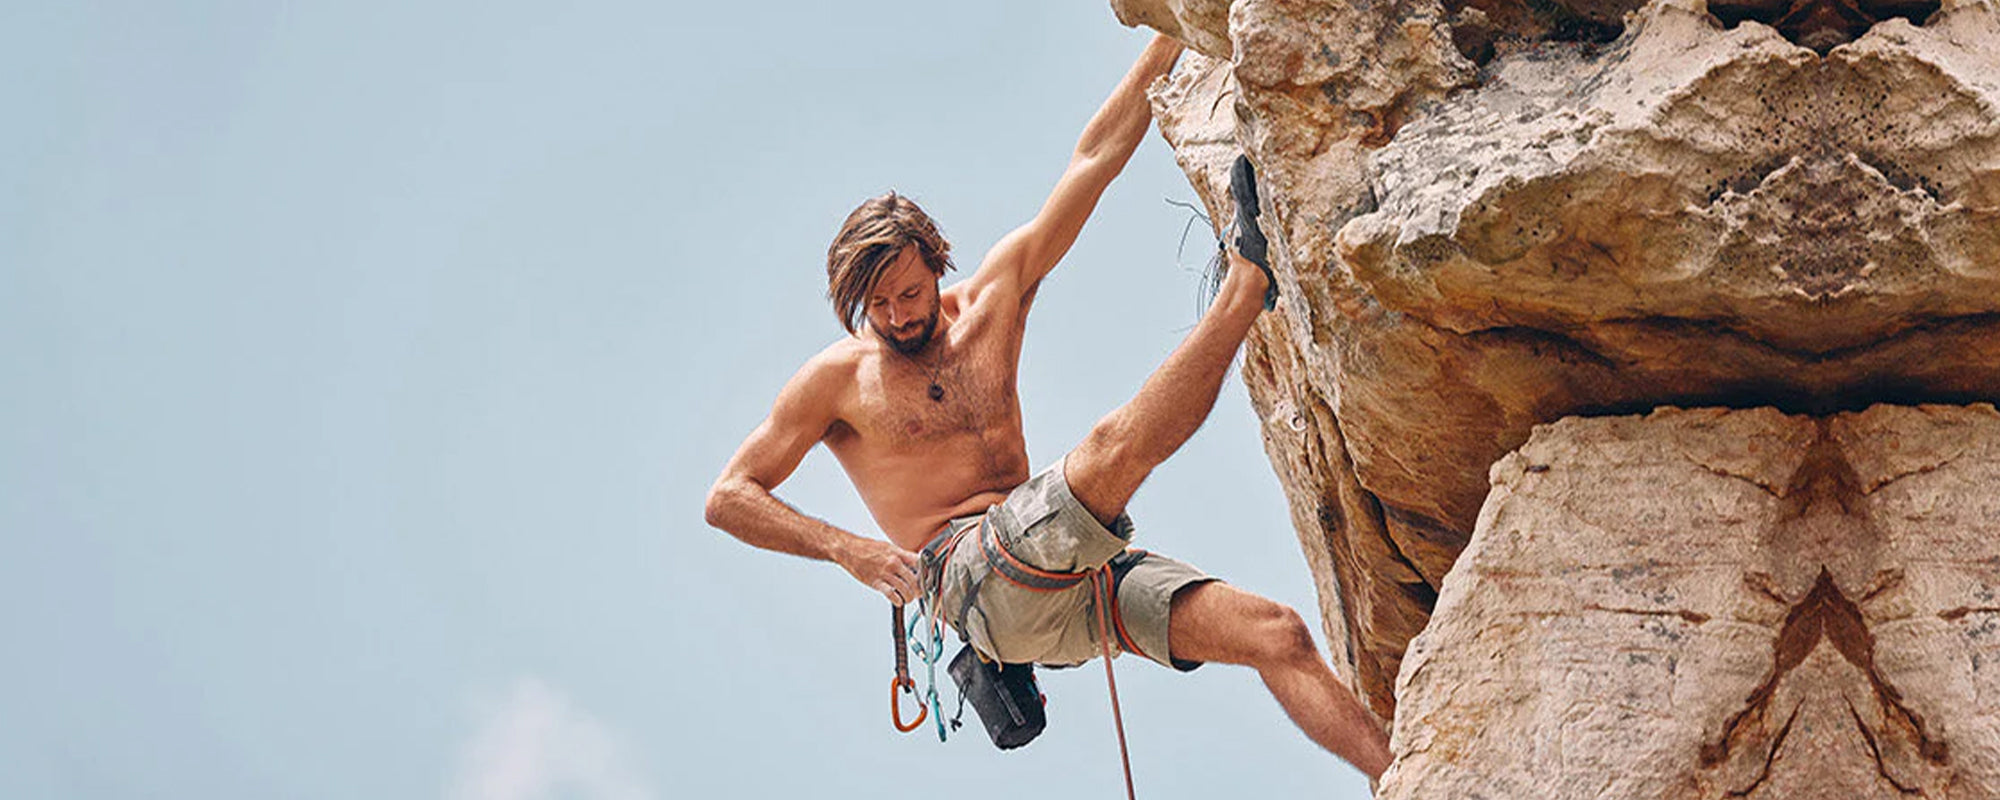 Advantages of Rock Climbing For BJJ